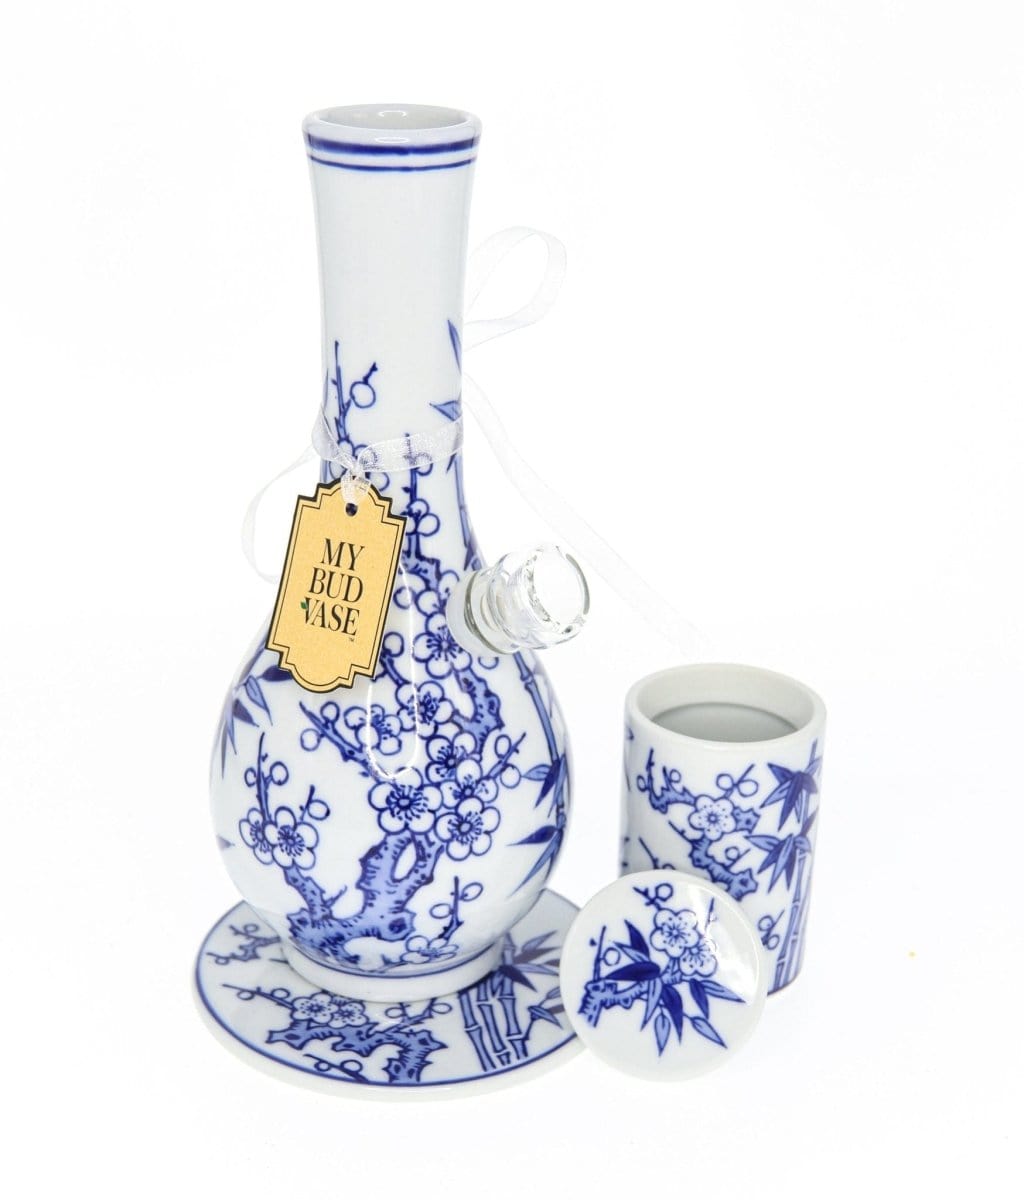 My Bud Vase Water Pipe My Bud Vase "Luck" Chinese Porcelain Vase Bong